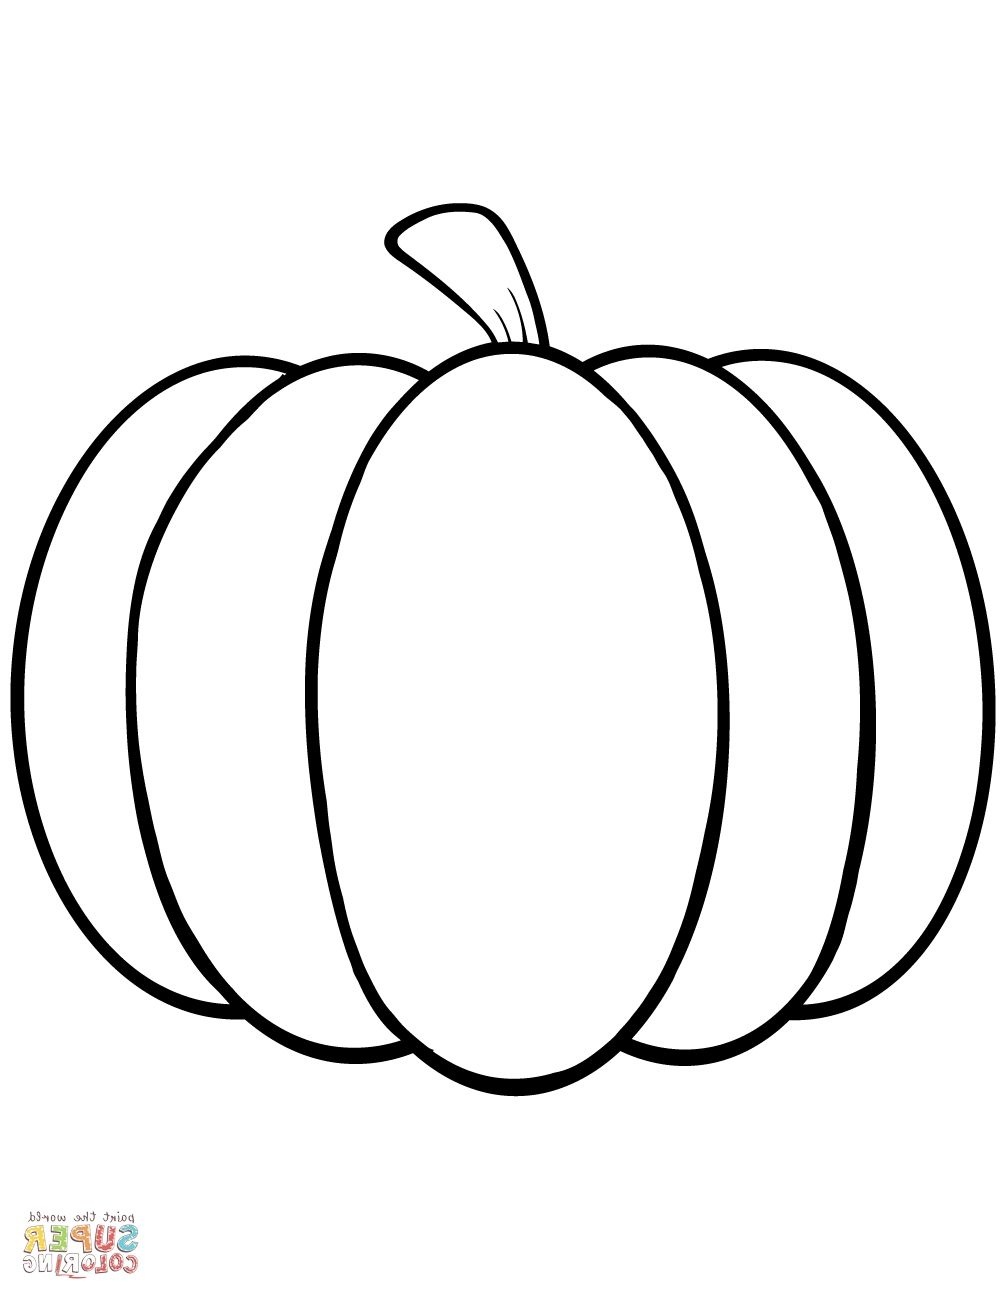 Pumpkin Coloring Sheet | Coloring Page | Pumpkin Coloring Pages - Free Printable Pumpkin Coloring Pages